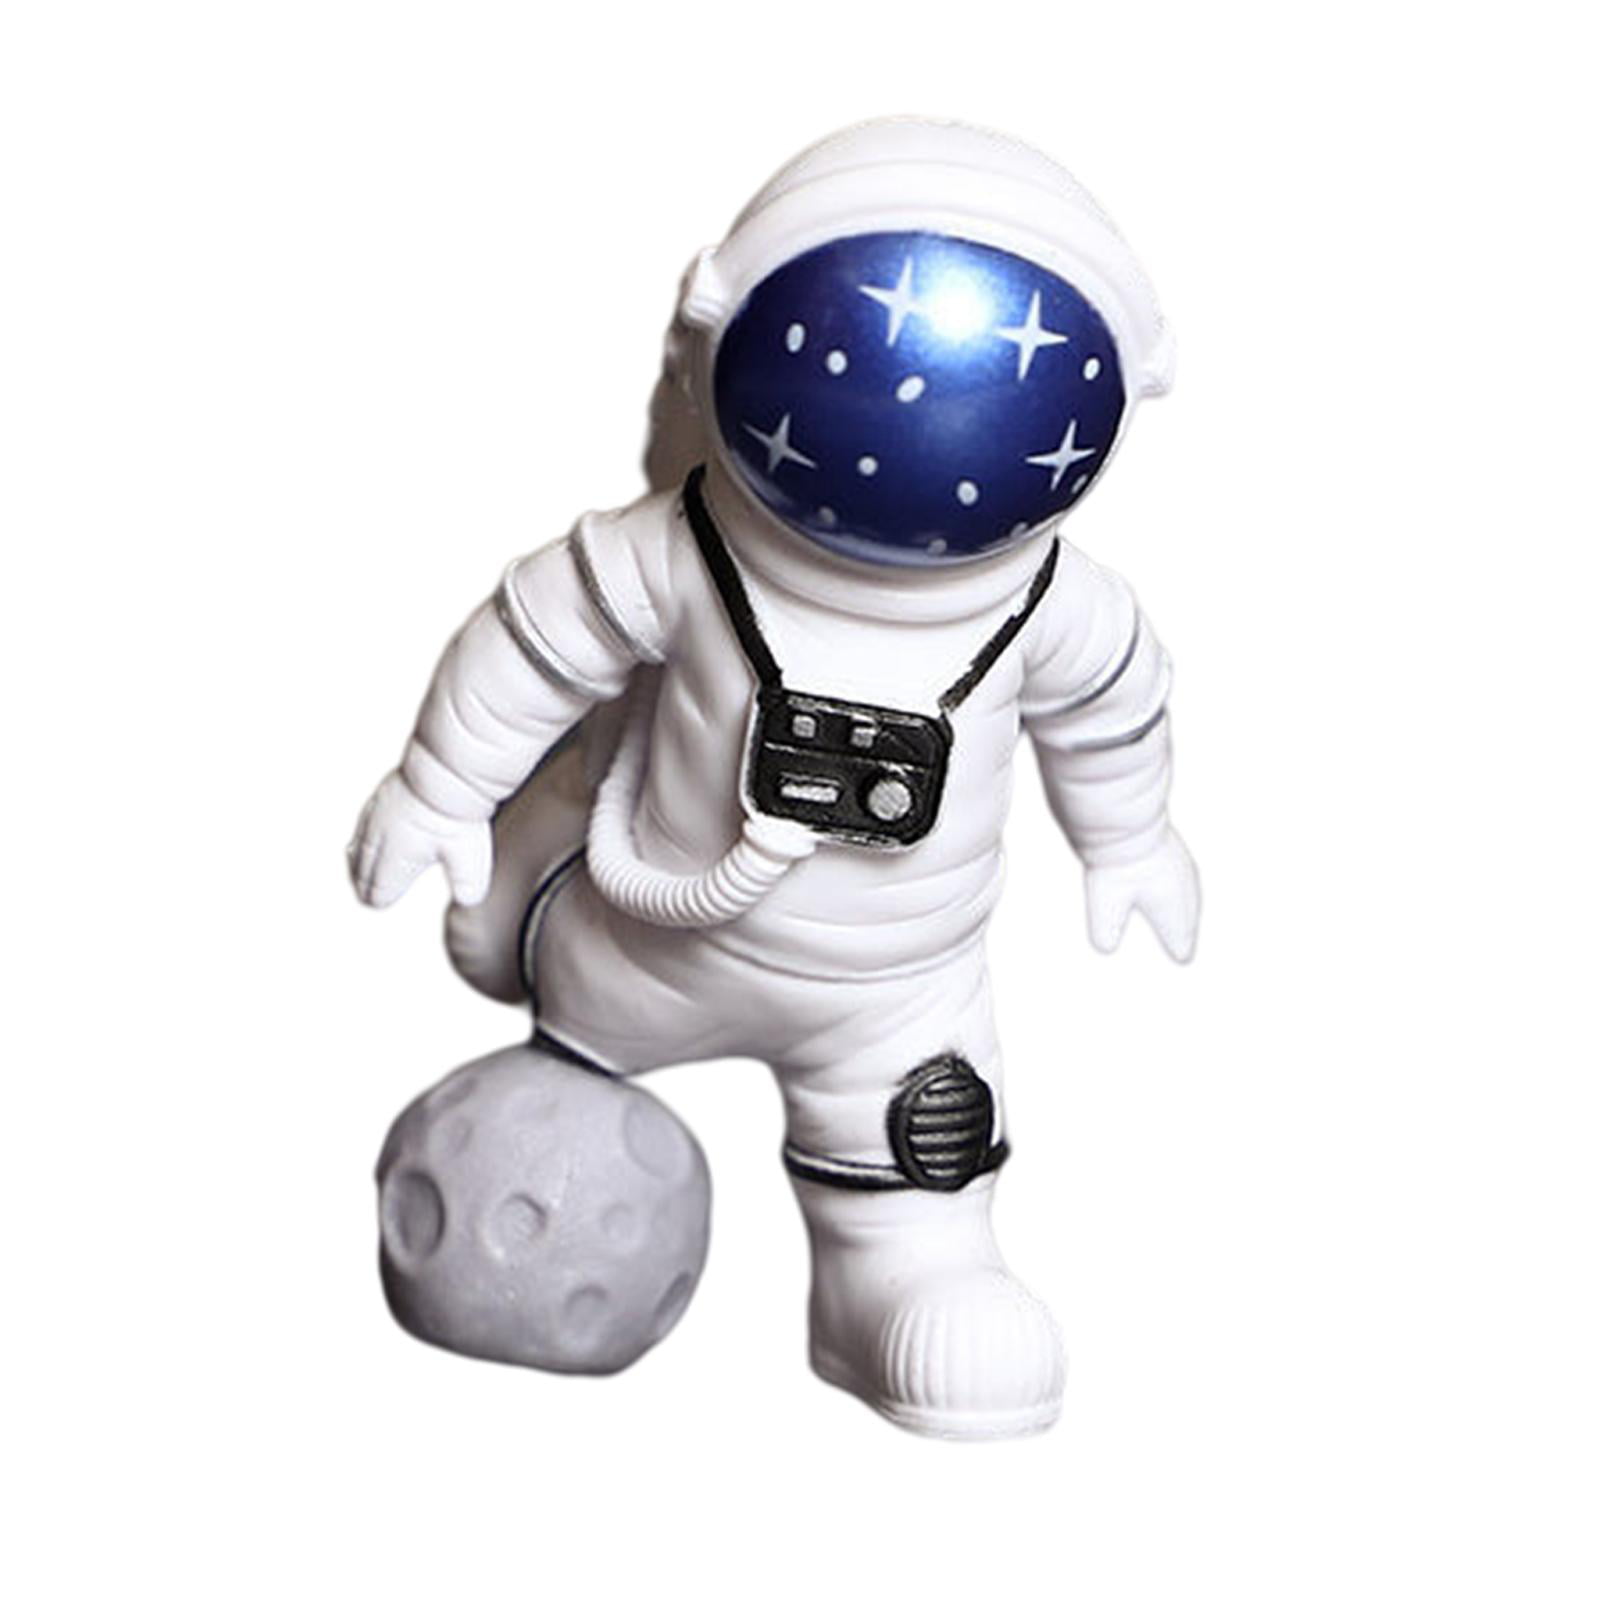 Astronaut Statues Sculpture Figurine Ornament Home Arts Crafts Desktop Tabletop 